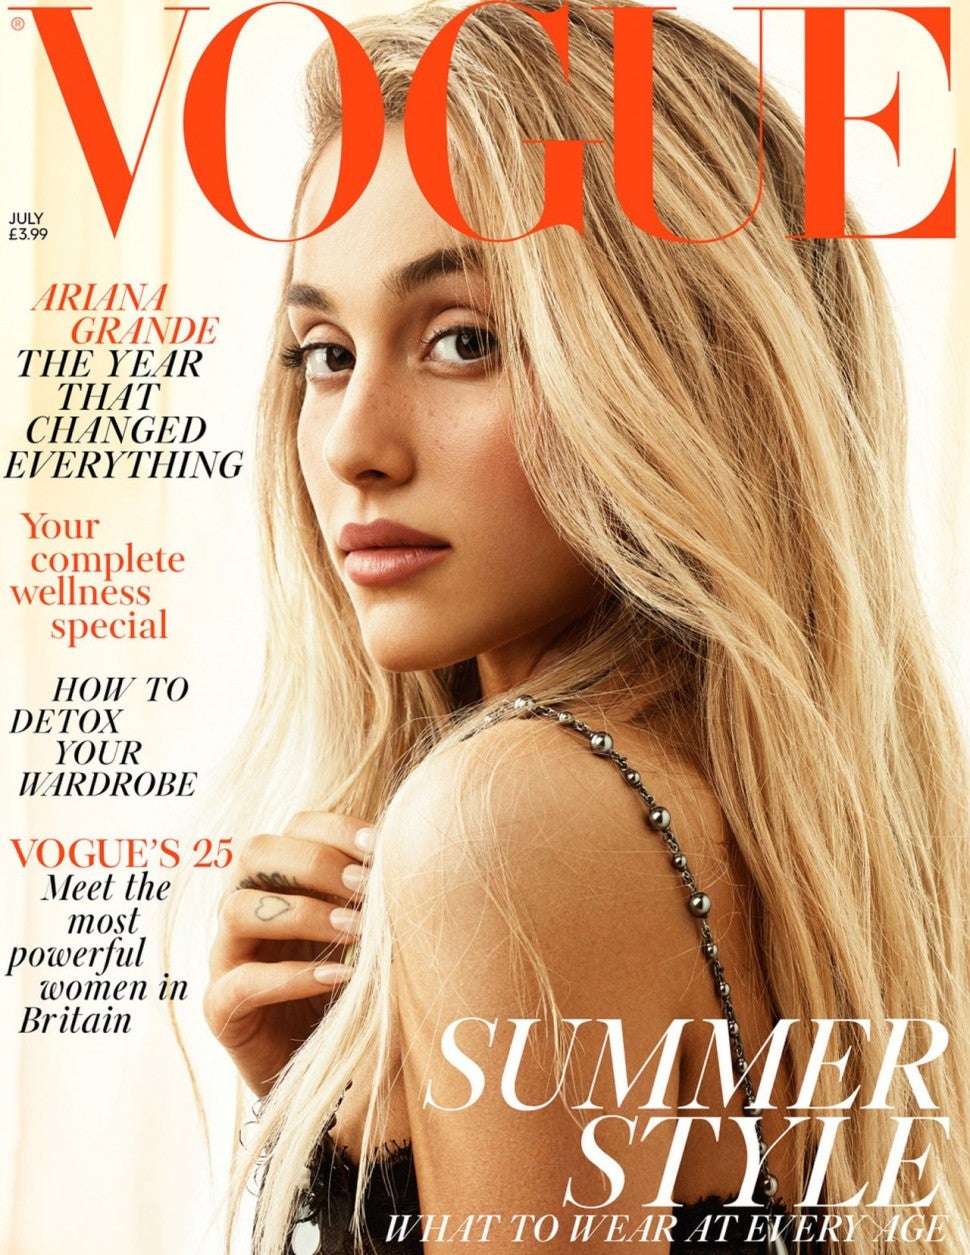 Ariana Grande covers British Vogue